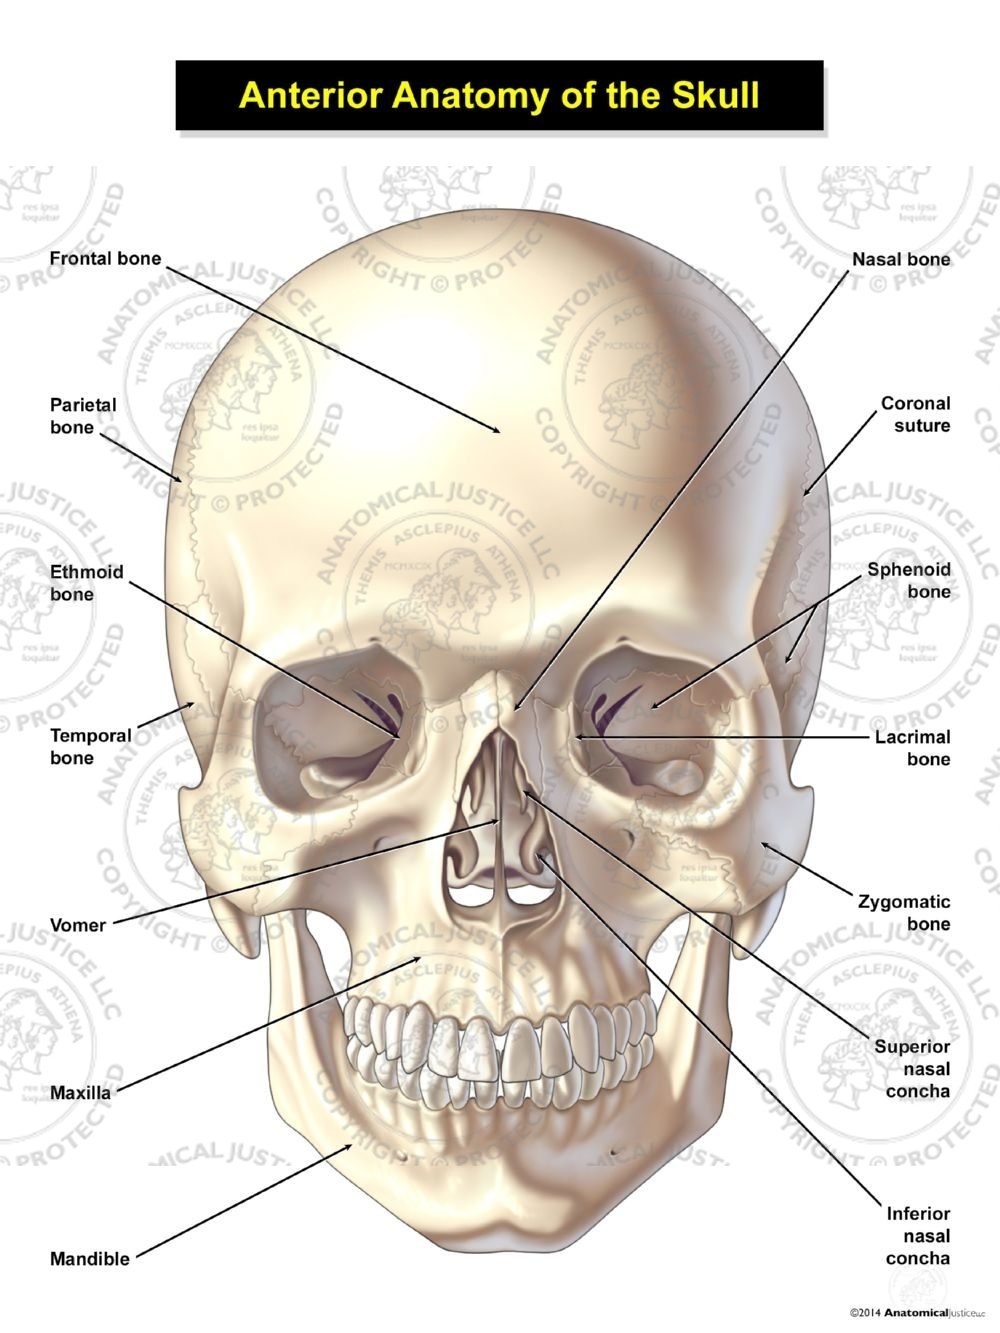 Anterior Anatomy of the Skull